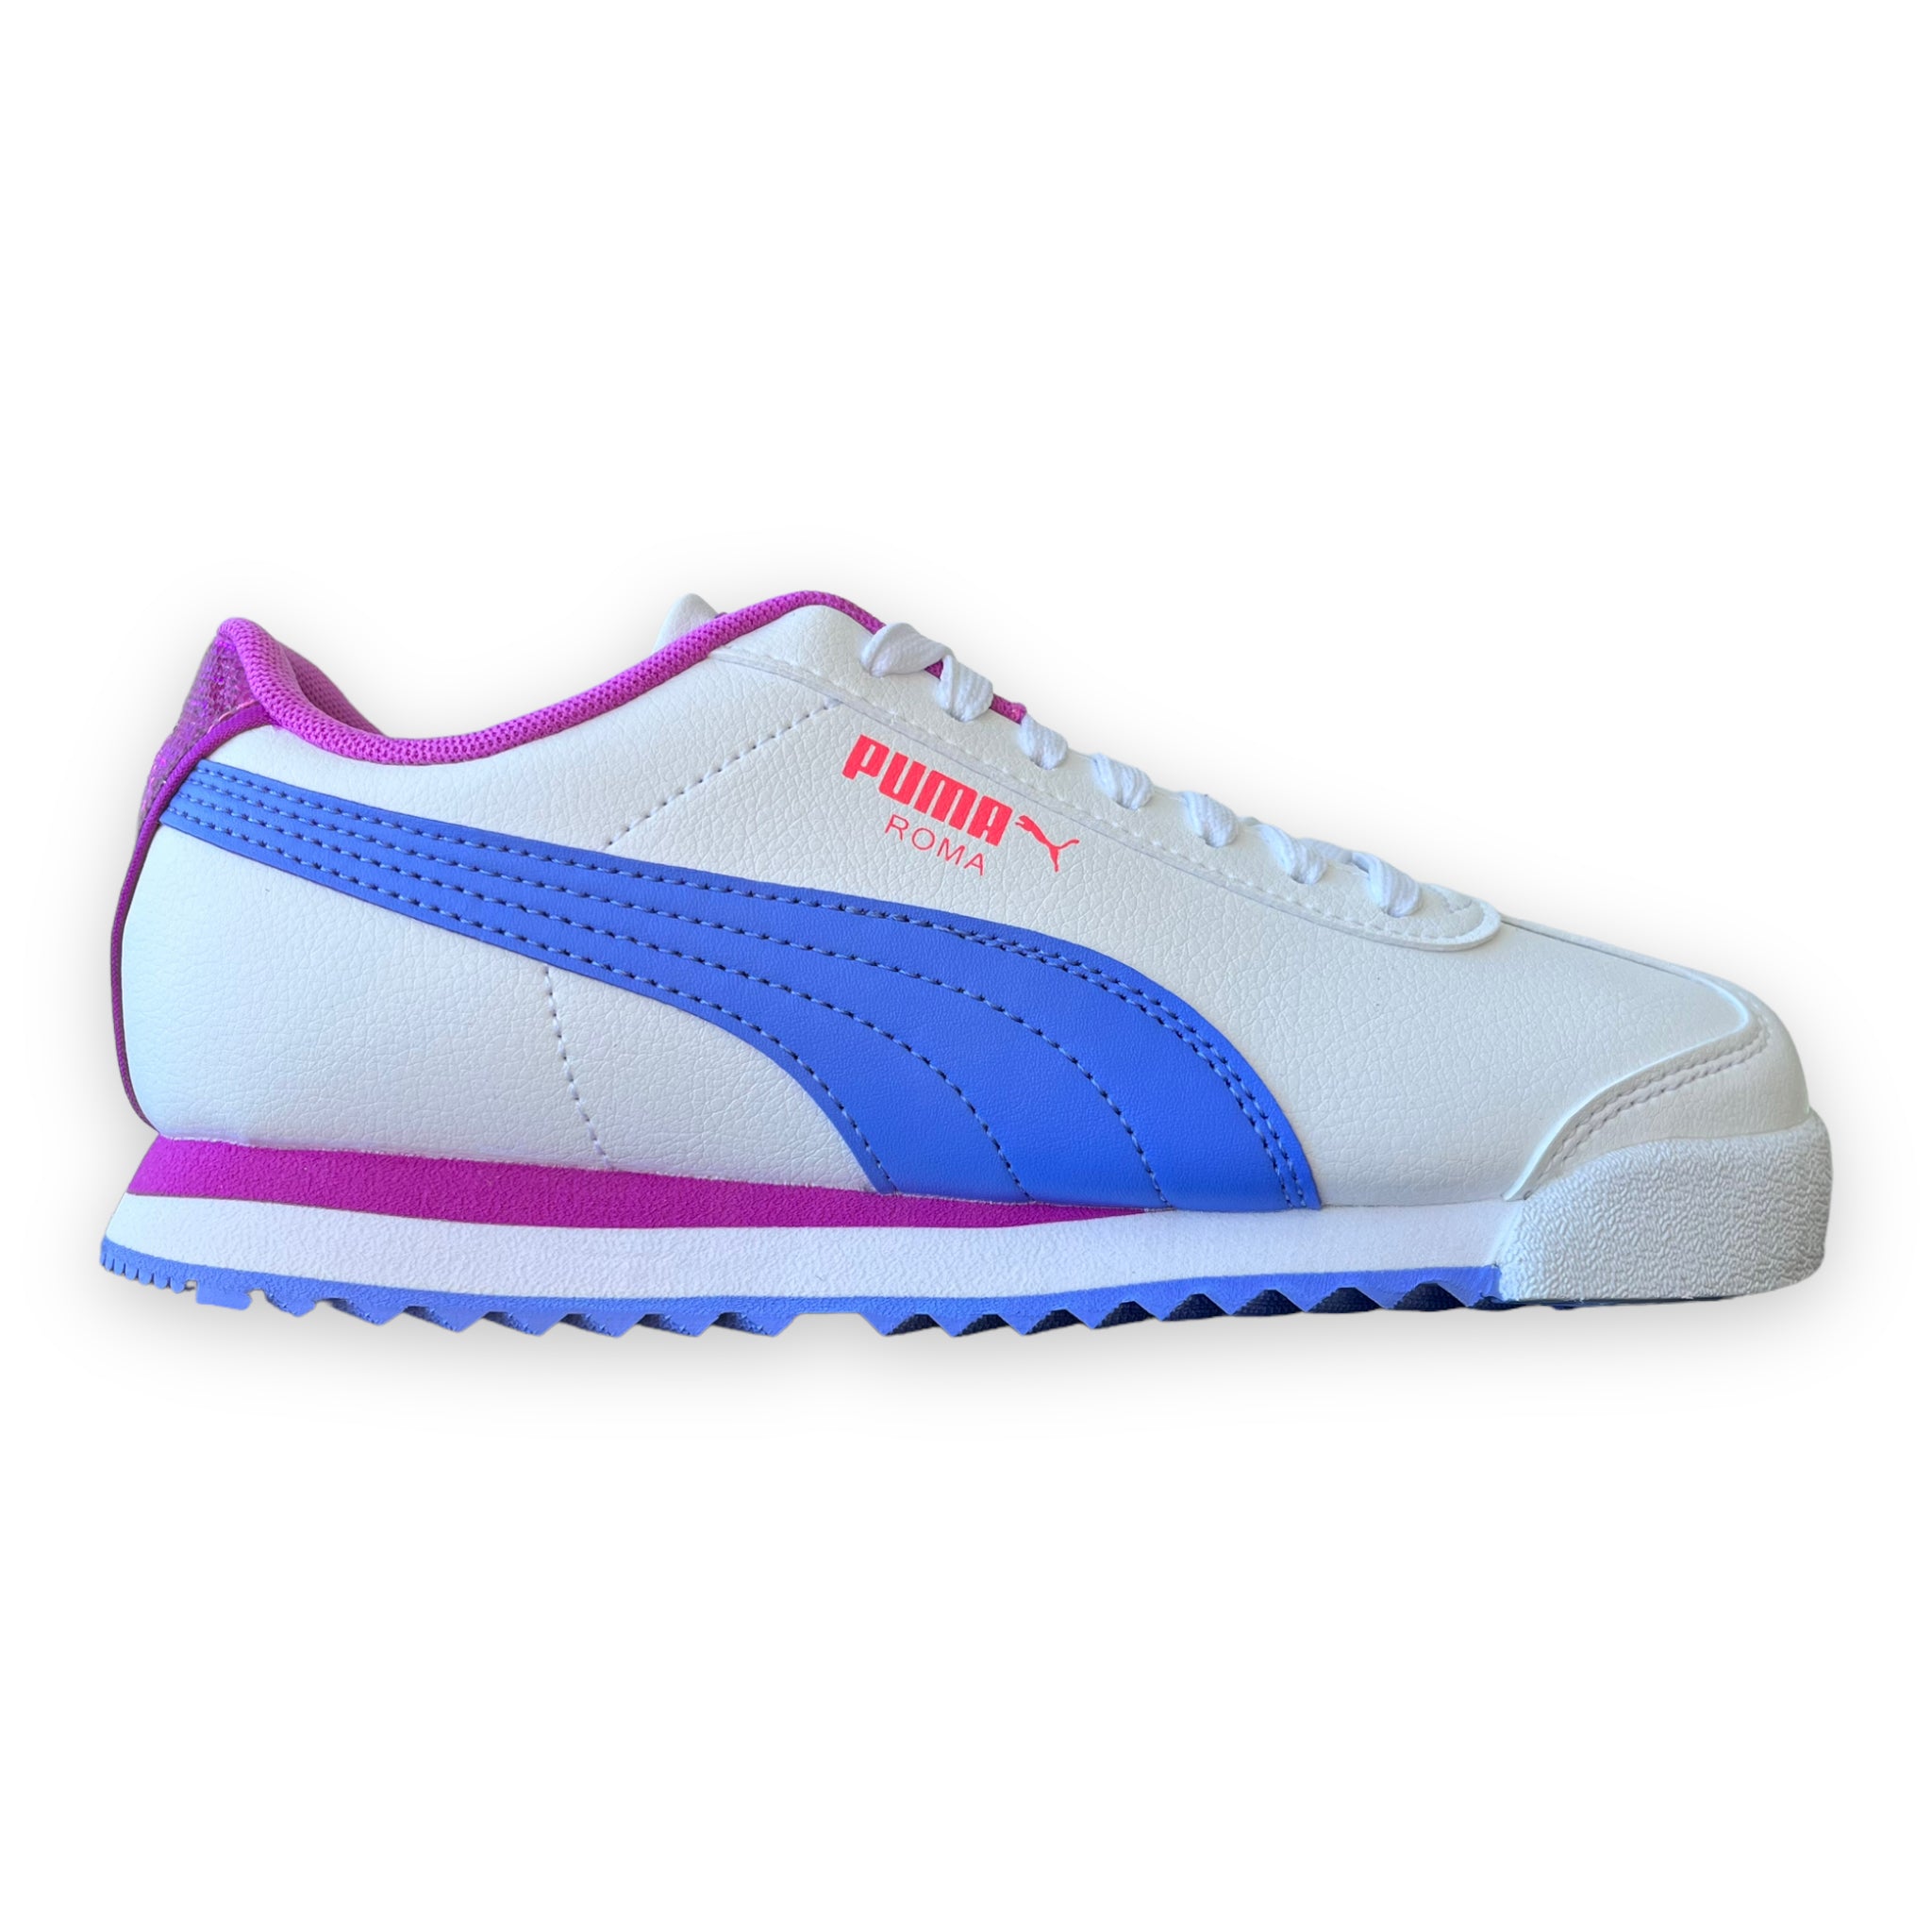 Pink Glitter Glam Sneakers: Lightweight Women’s & Girl’s Fashion Sneakers 5.5